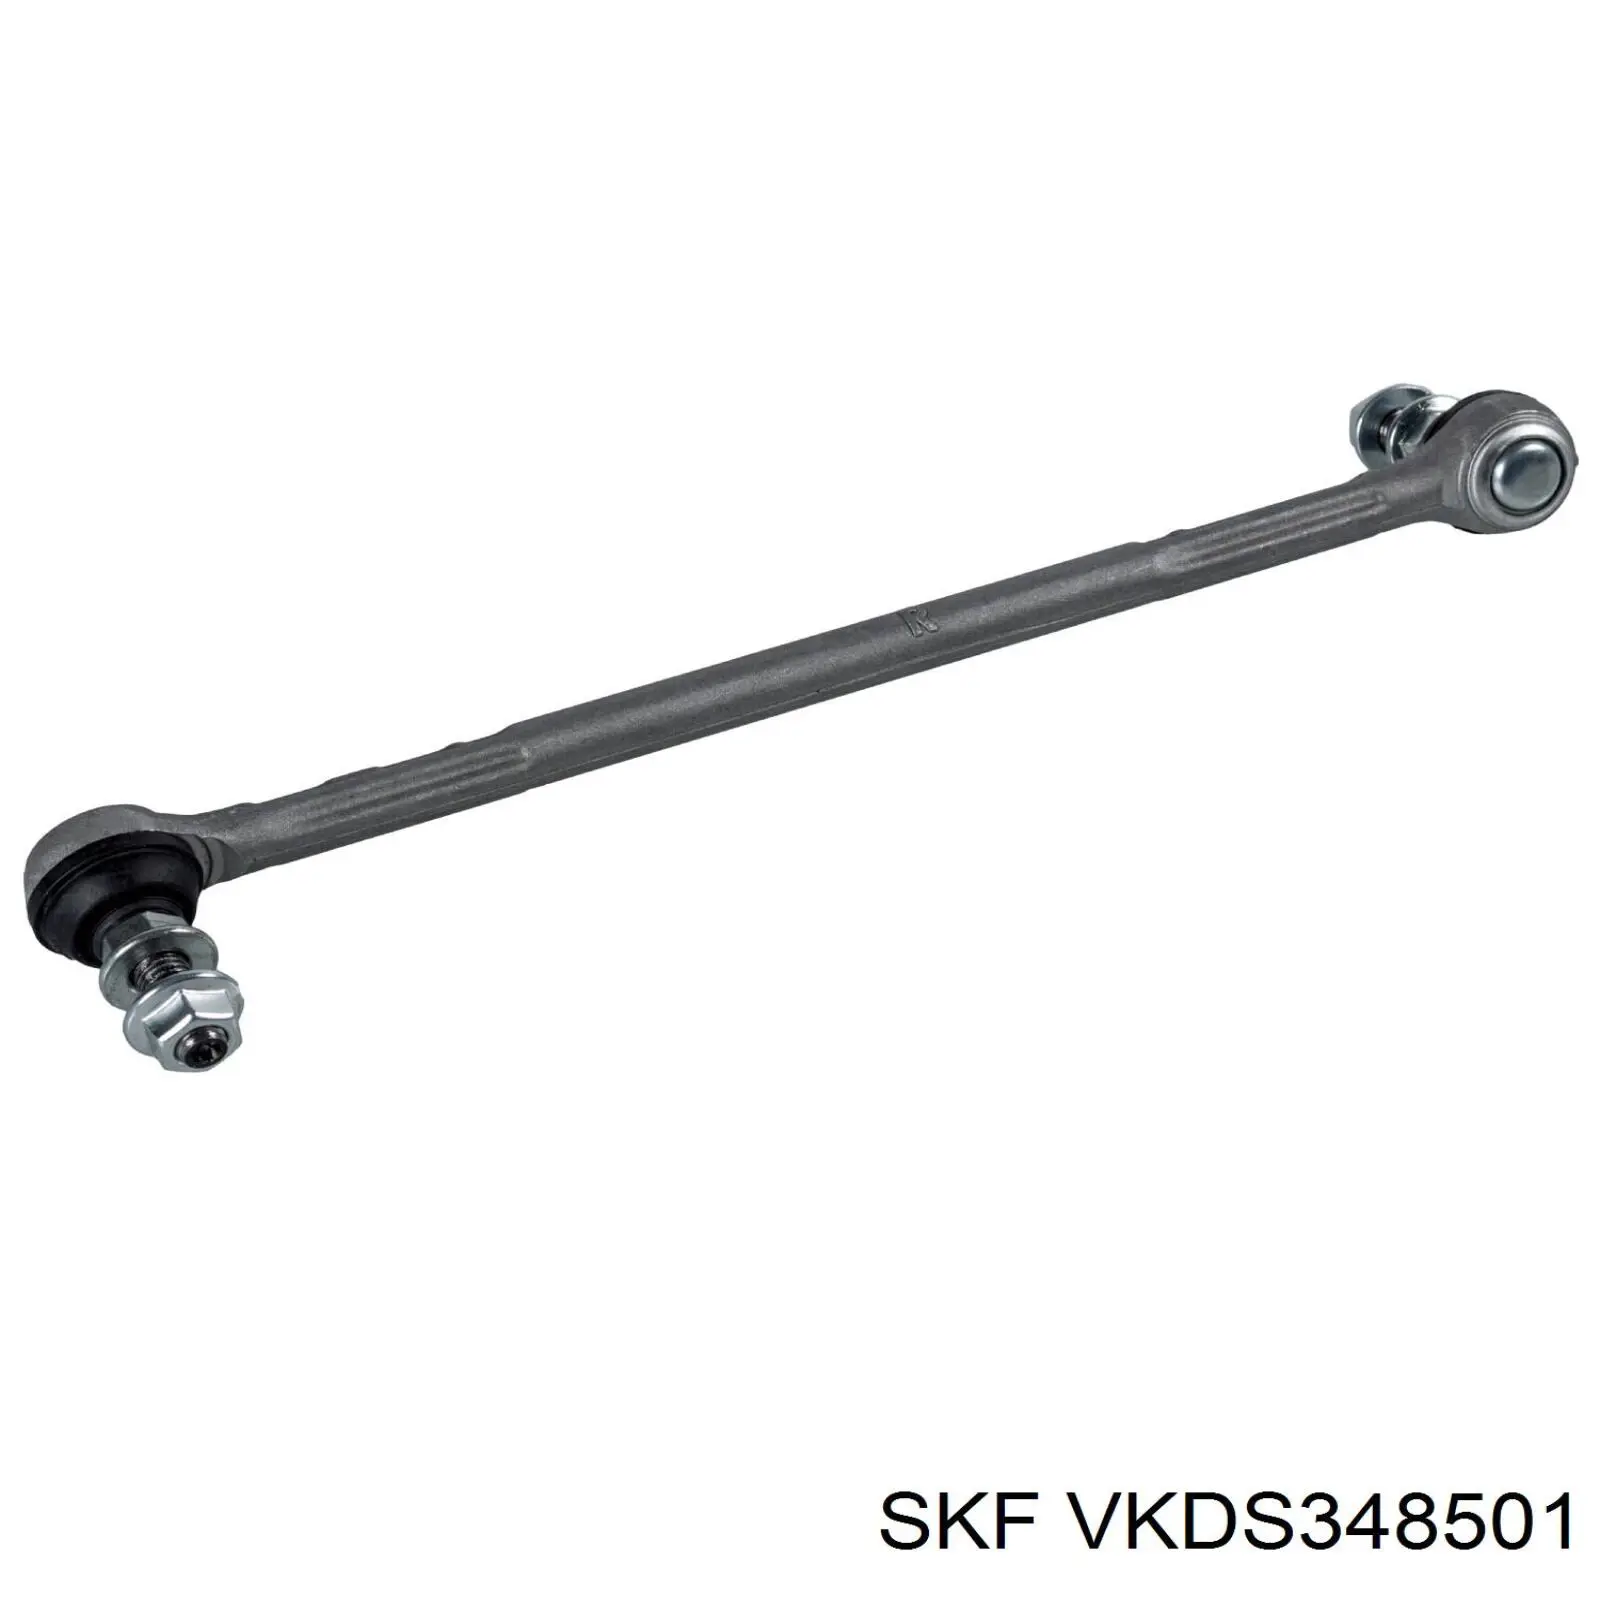 VKDS 348501 SKF barra estabilizadora delantera derecha